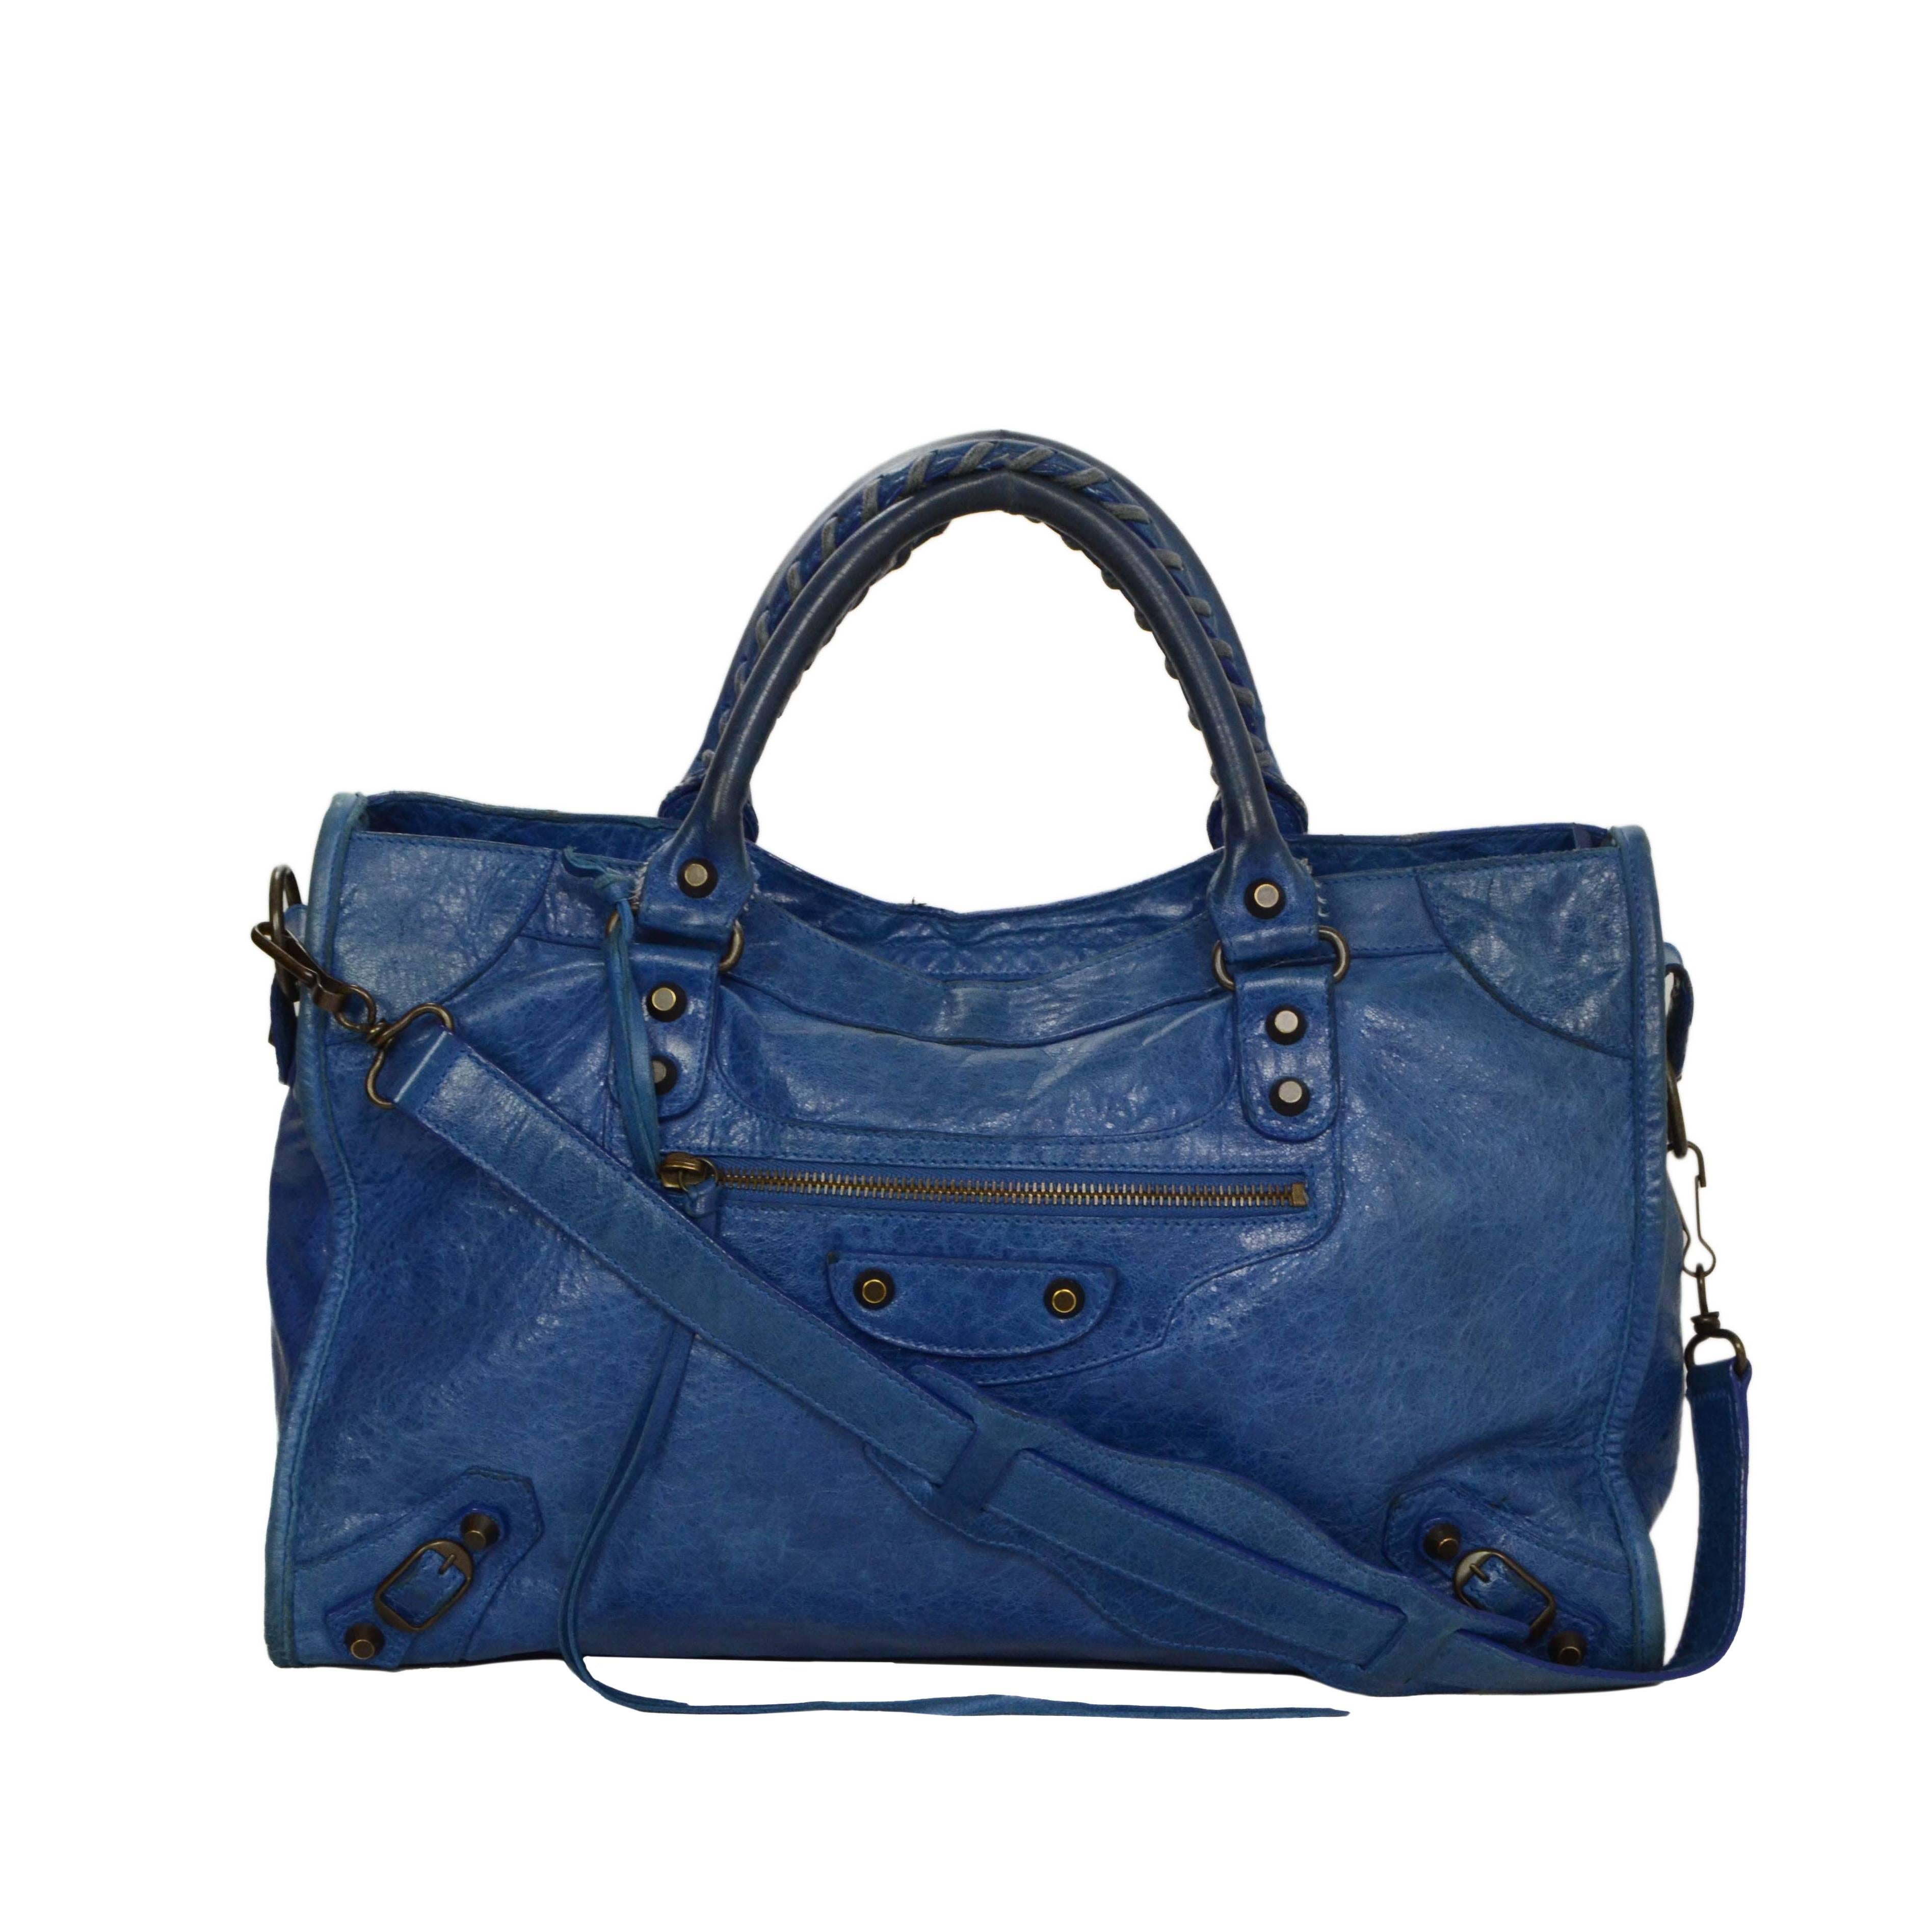 Balenciaga Blue Distressed Leather “City” Bag BHW